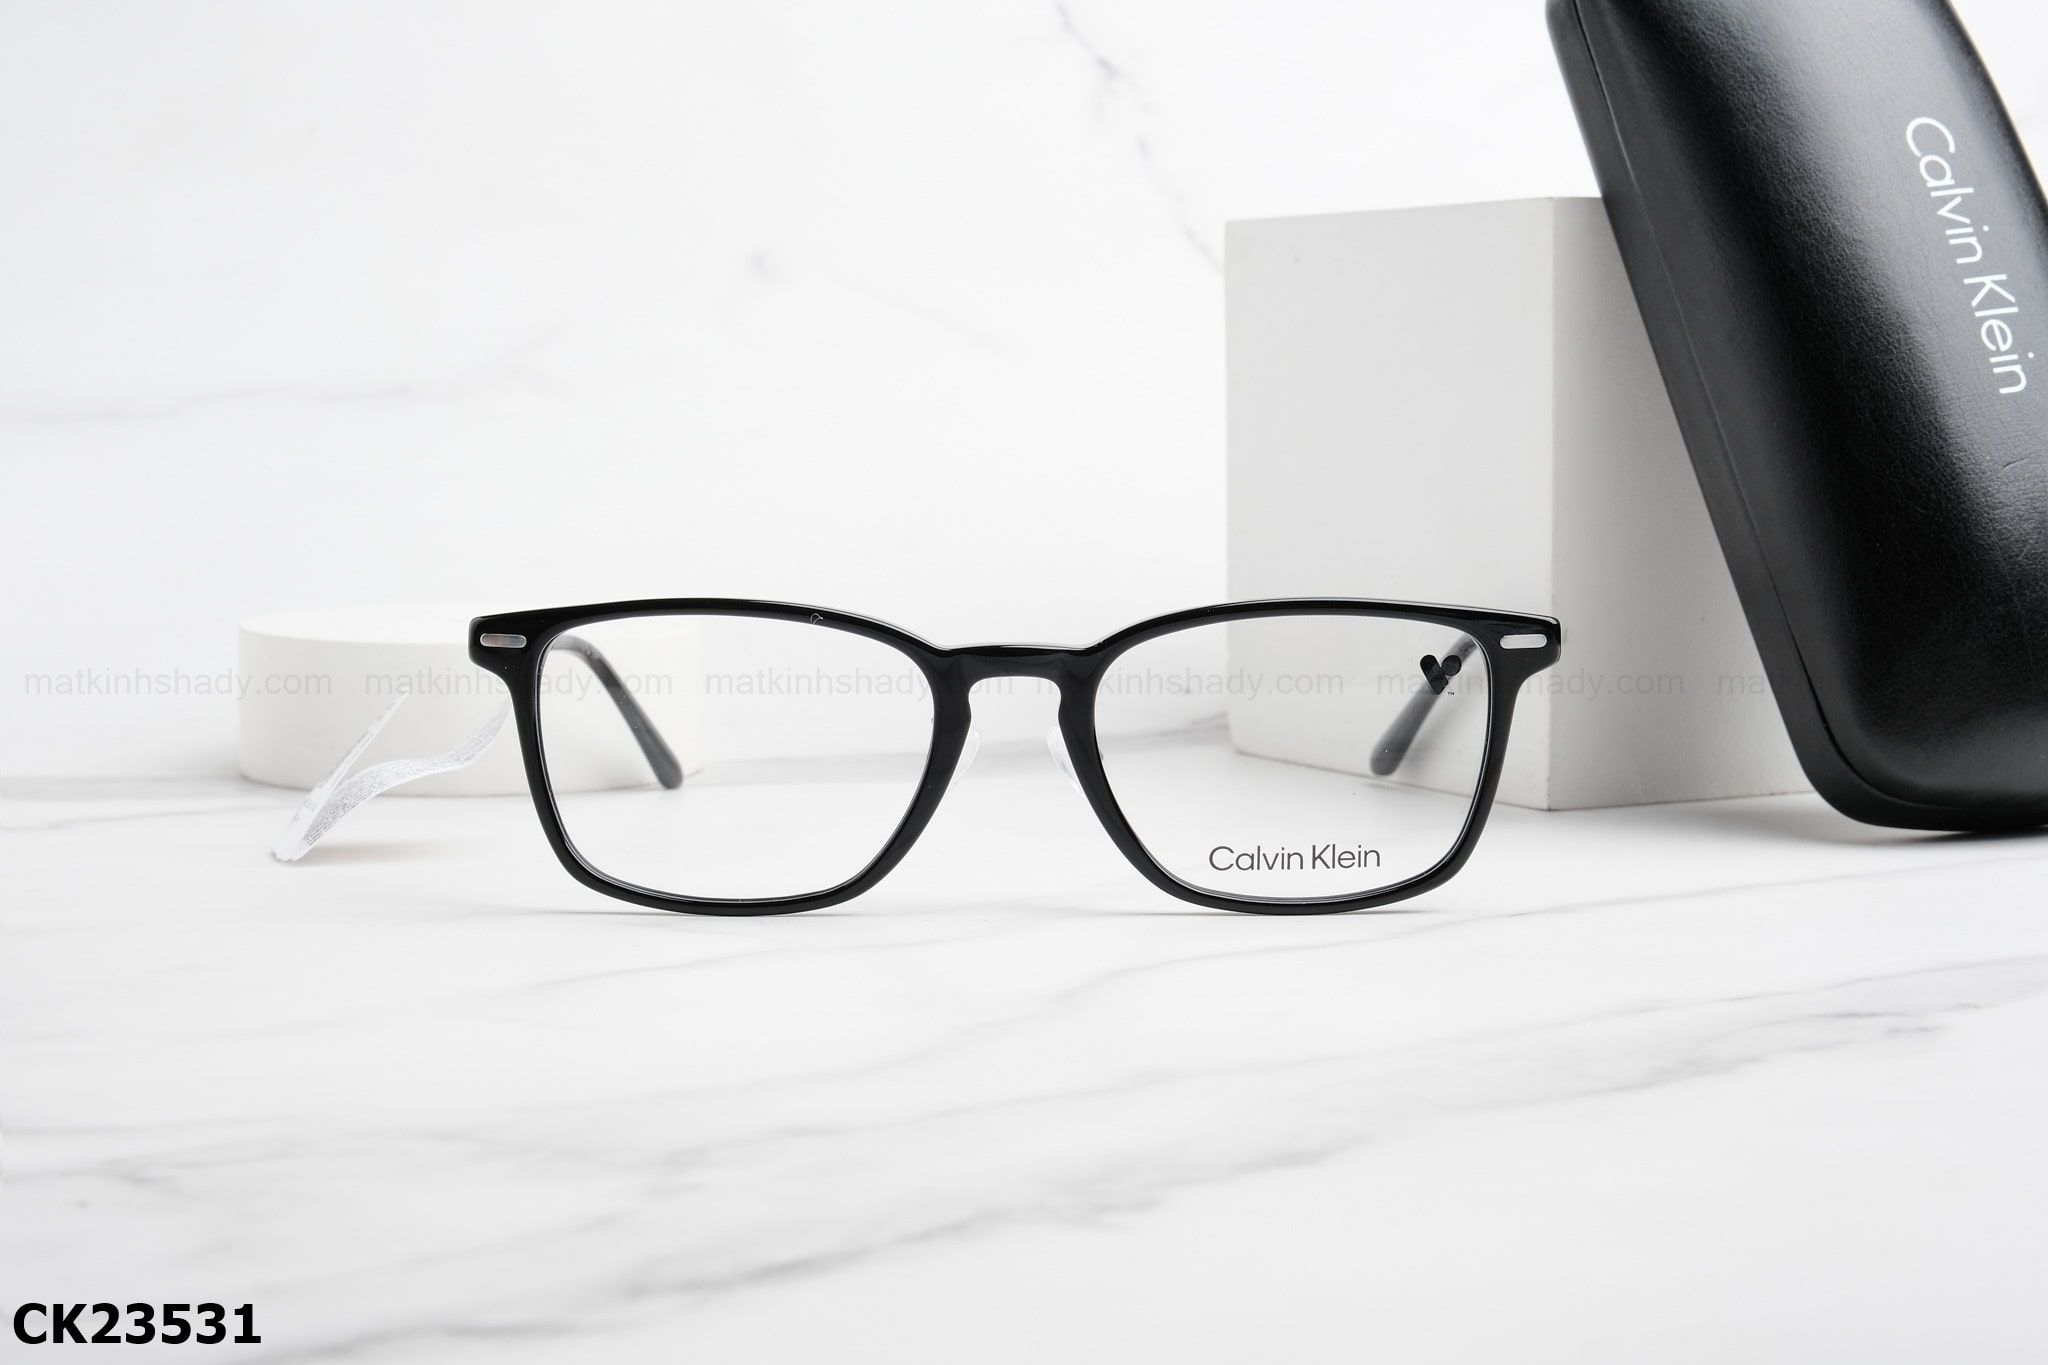  Calvin Klein Eyewear - Glasses - CK23531 